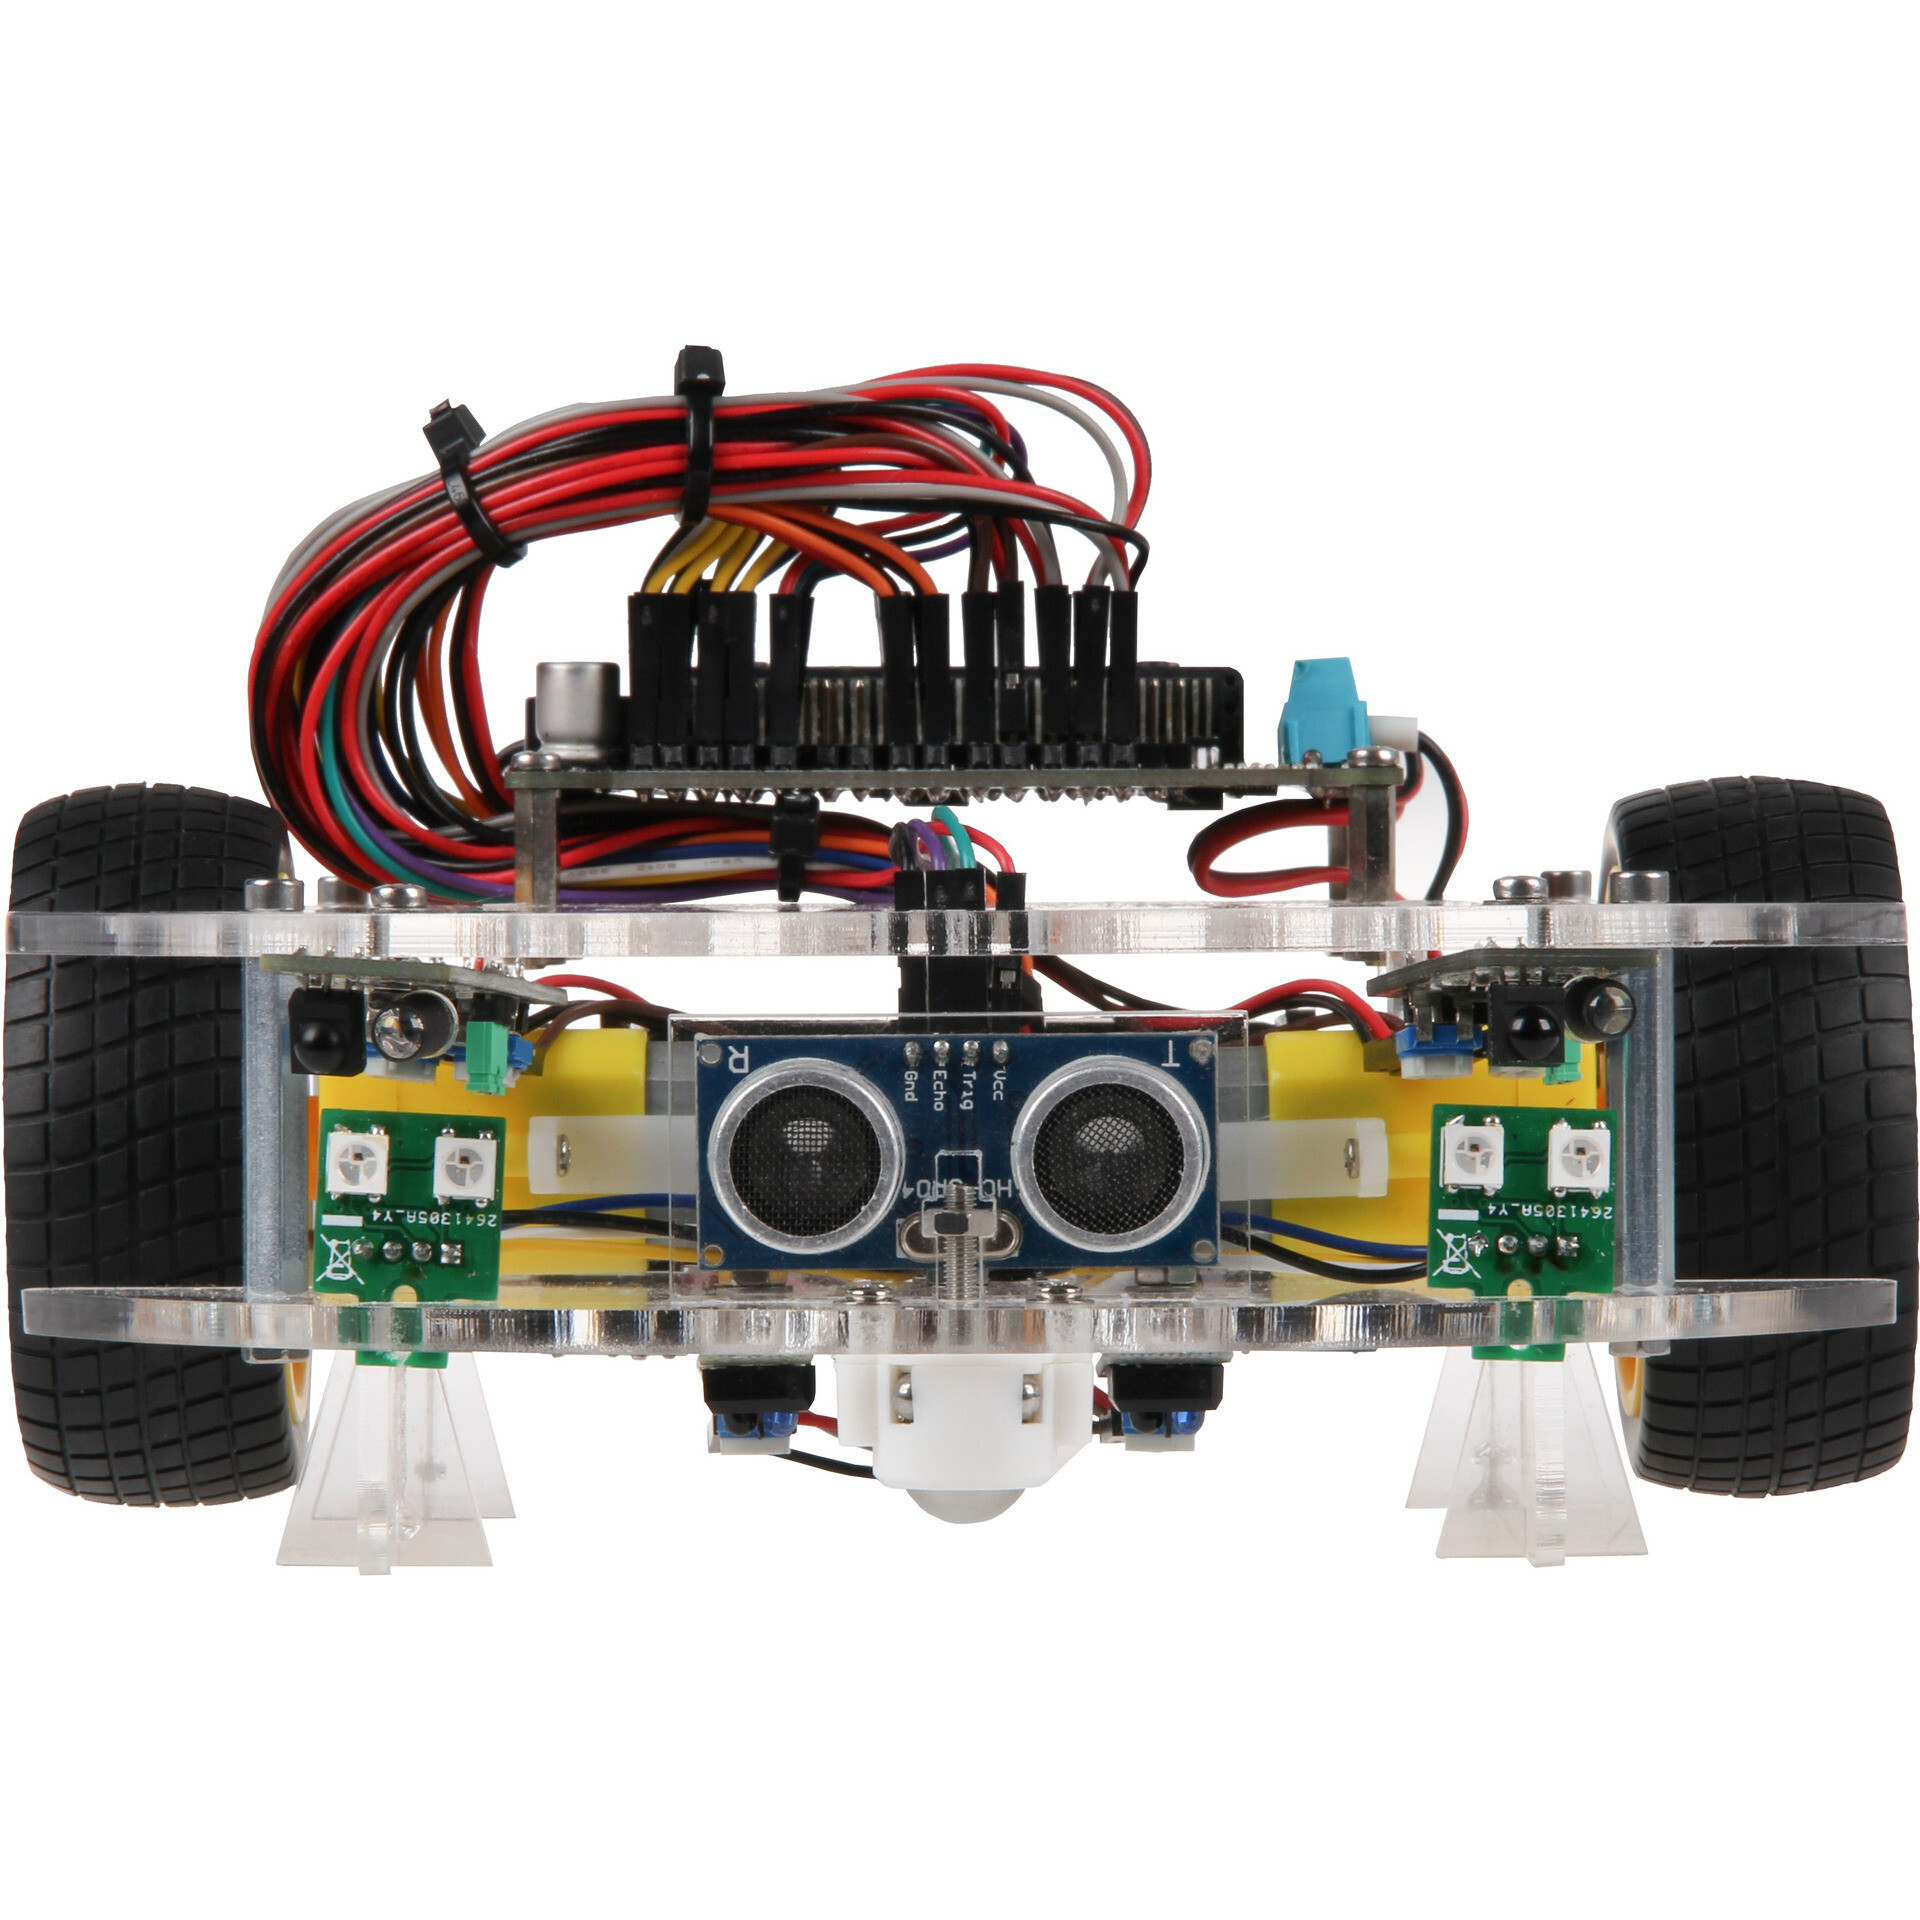 Joy-IT fertig montiertes programmierbares Roboterauto Joy-Car inkl. micro:bit v2 und beweglichem Ultraschallsensor